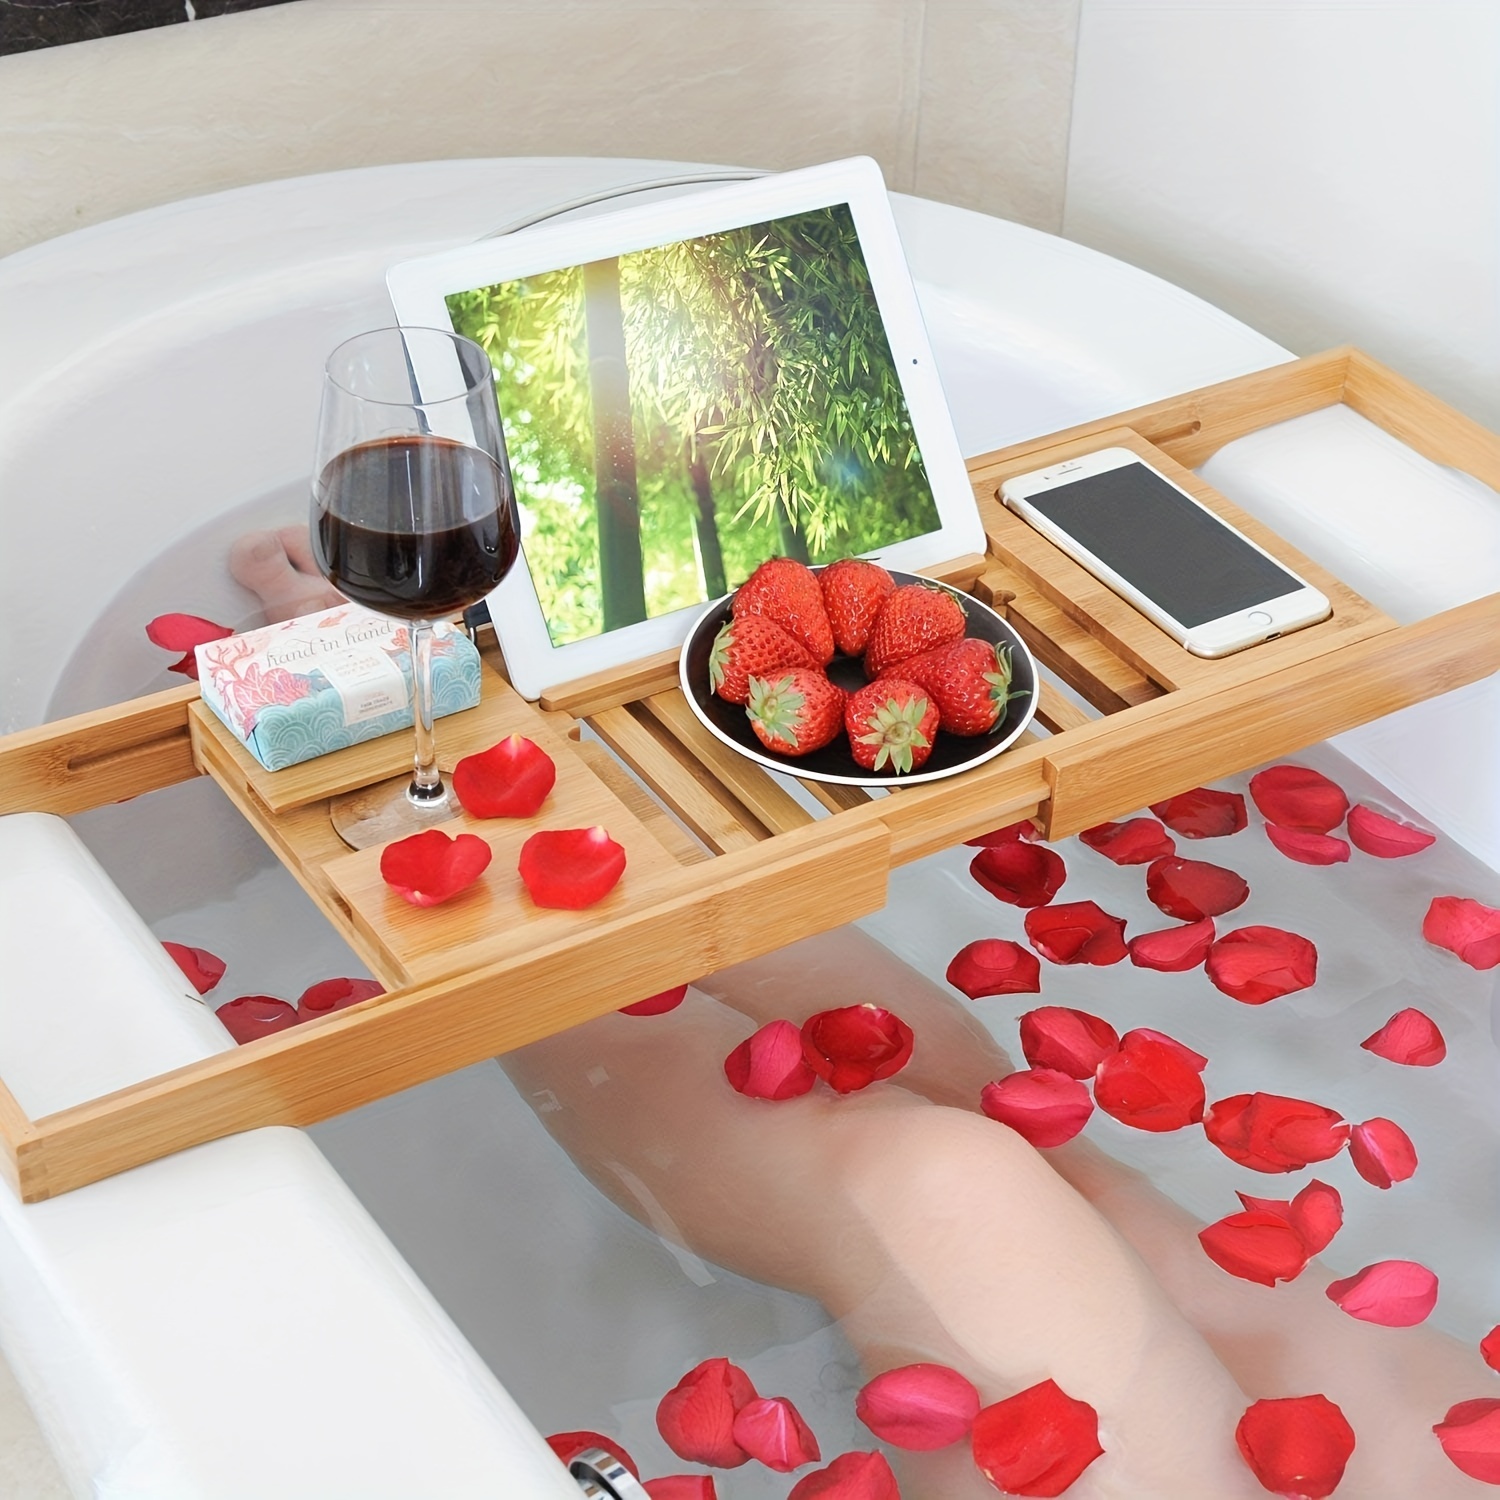 1PC Expandable Bath Shelf Caddy for Bathtubs, Plastic Shower and